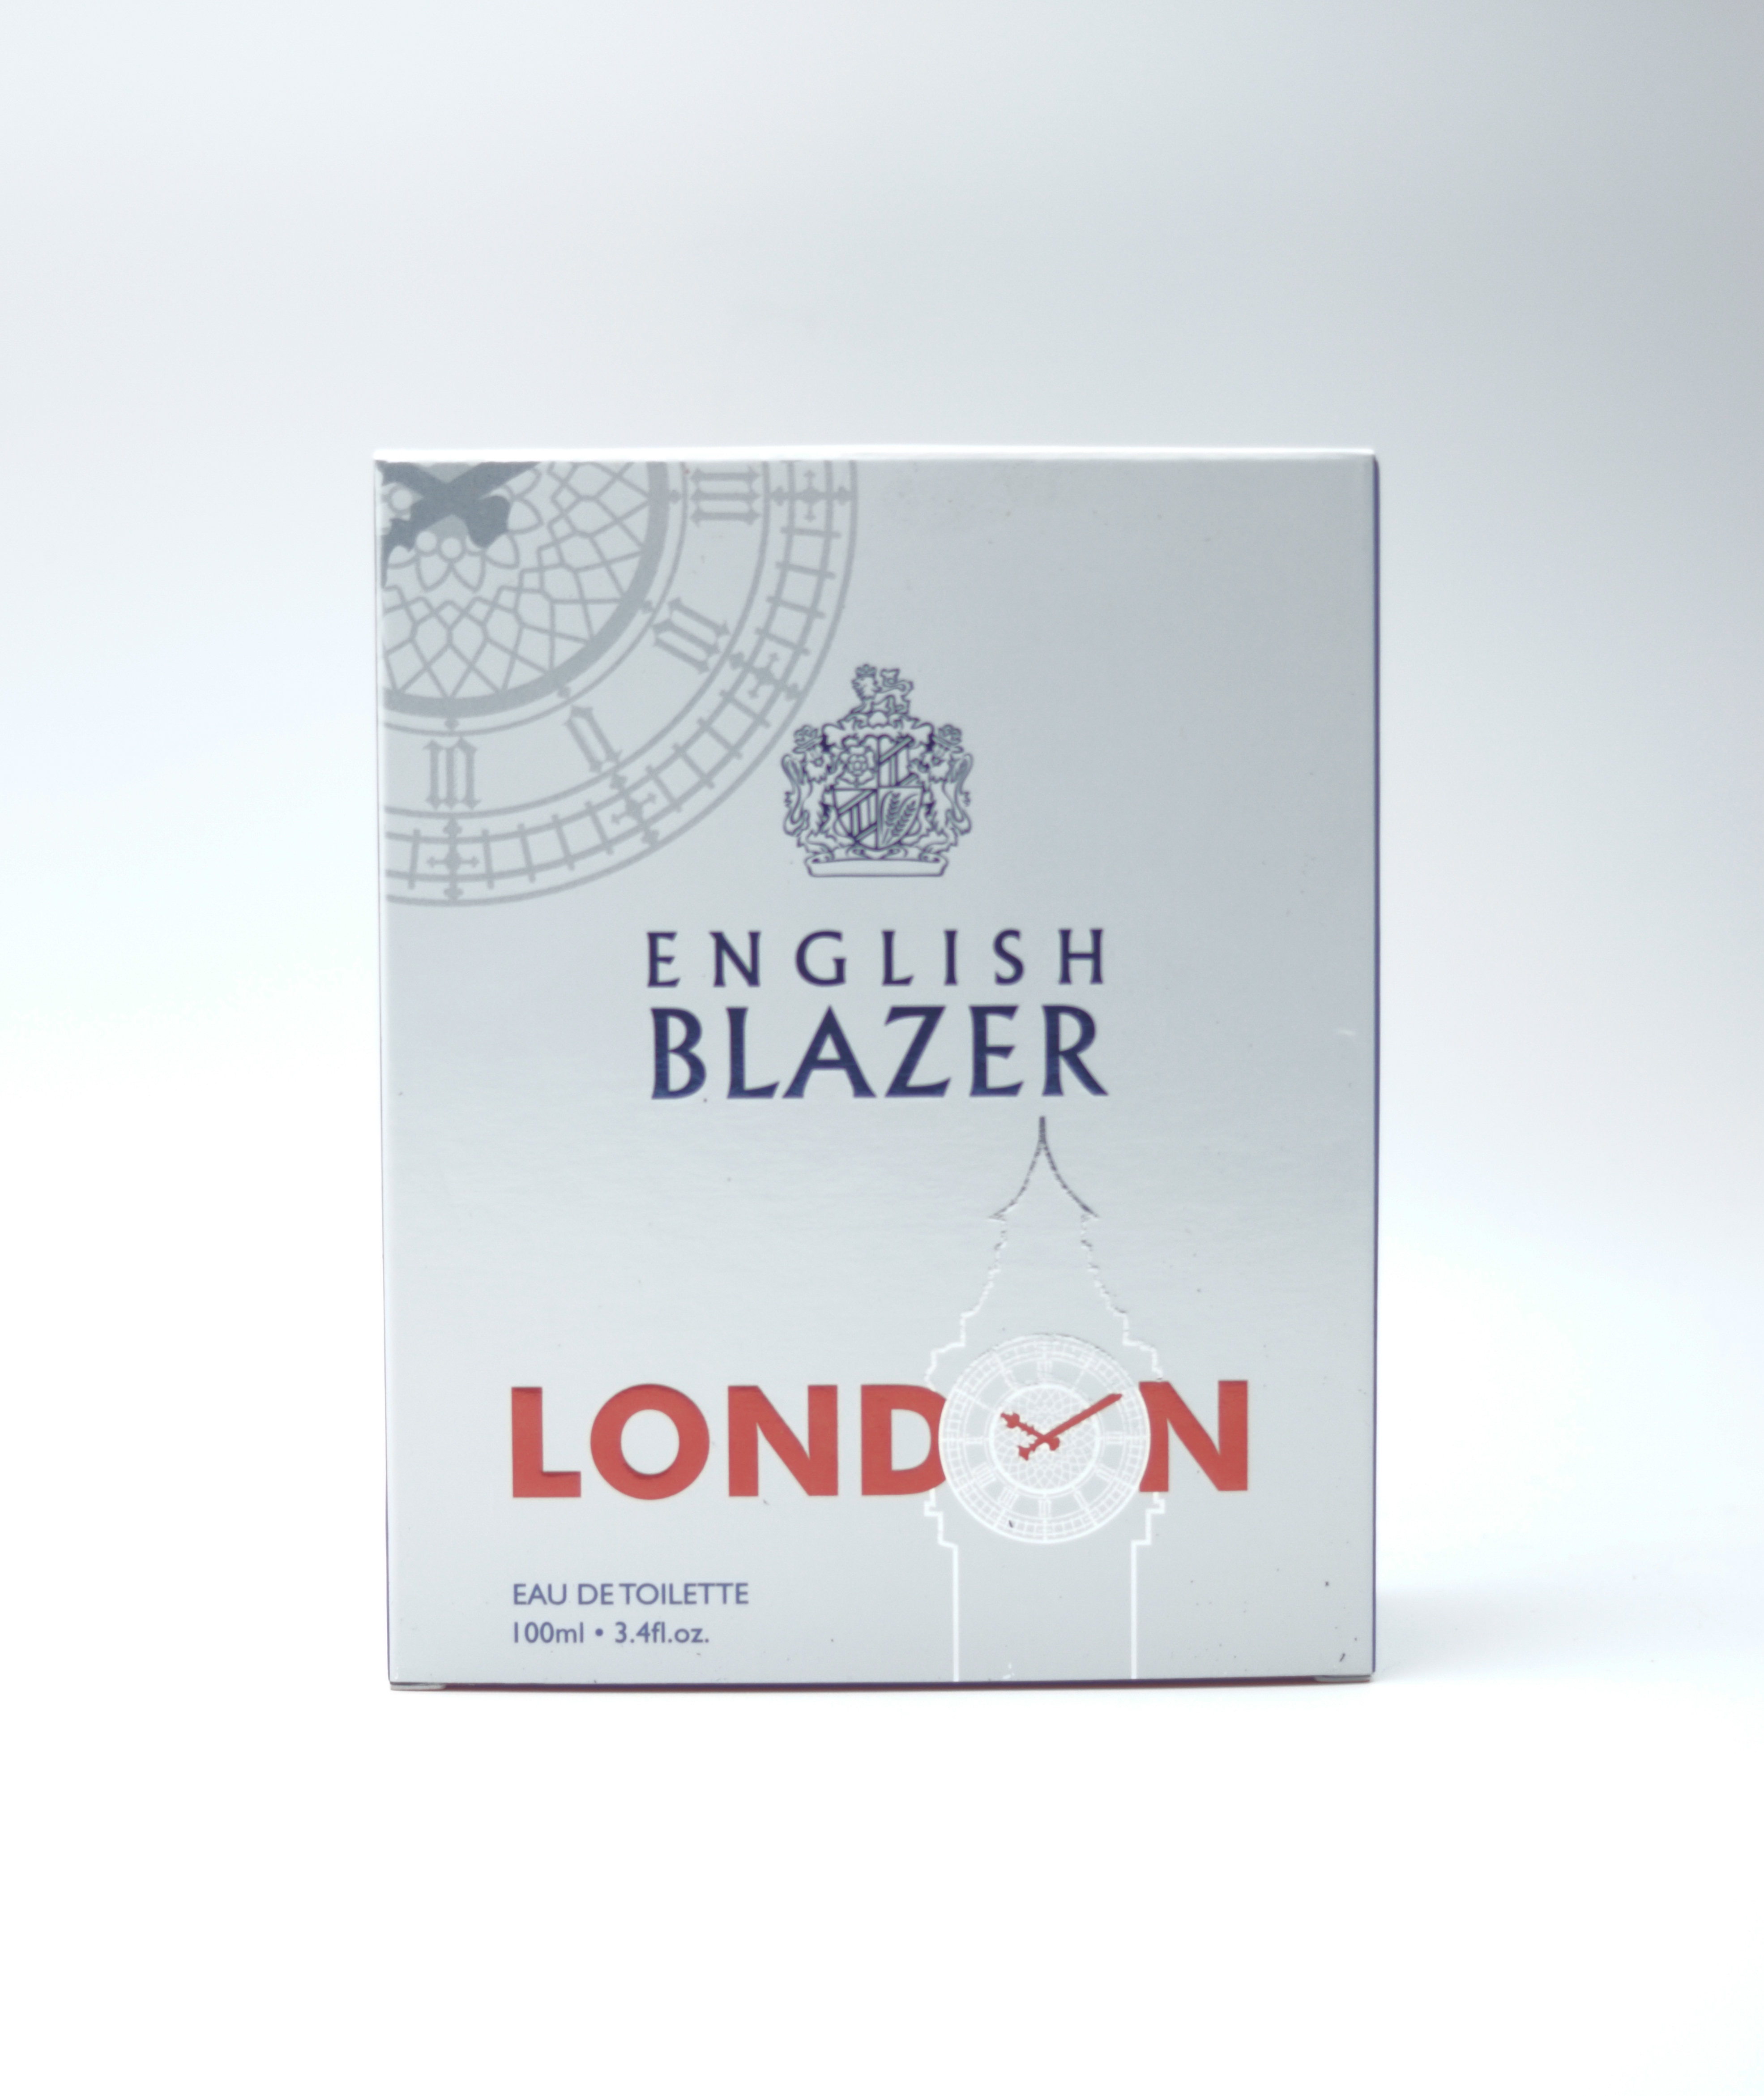 English Blazer London 100 ml Eau de Toilette Perfume SKU 96851